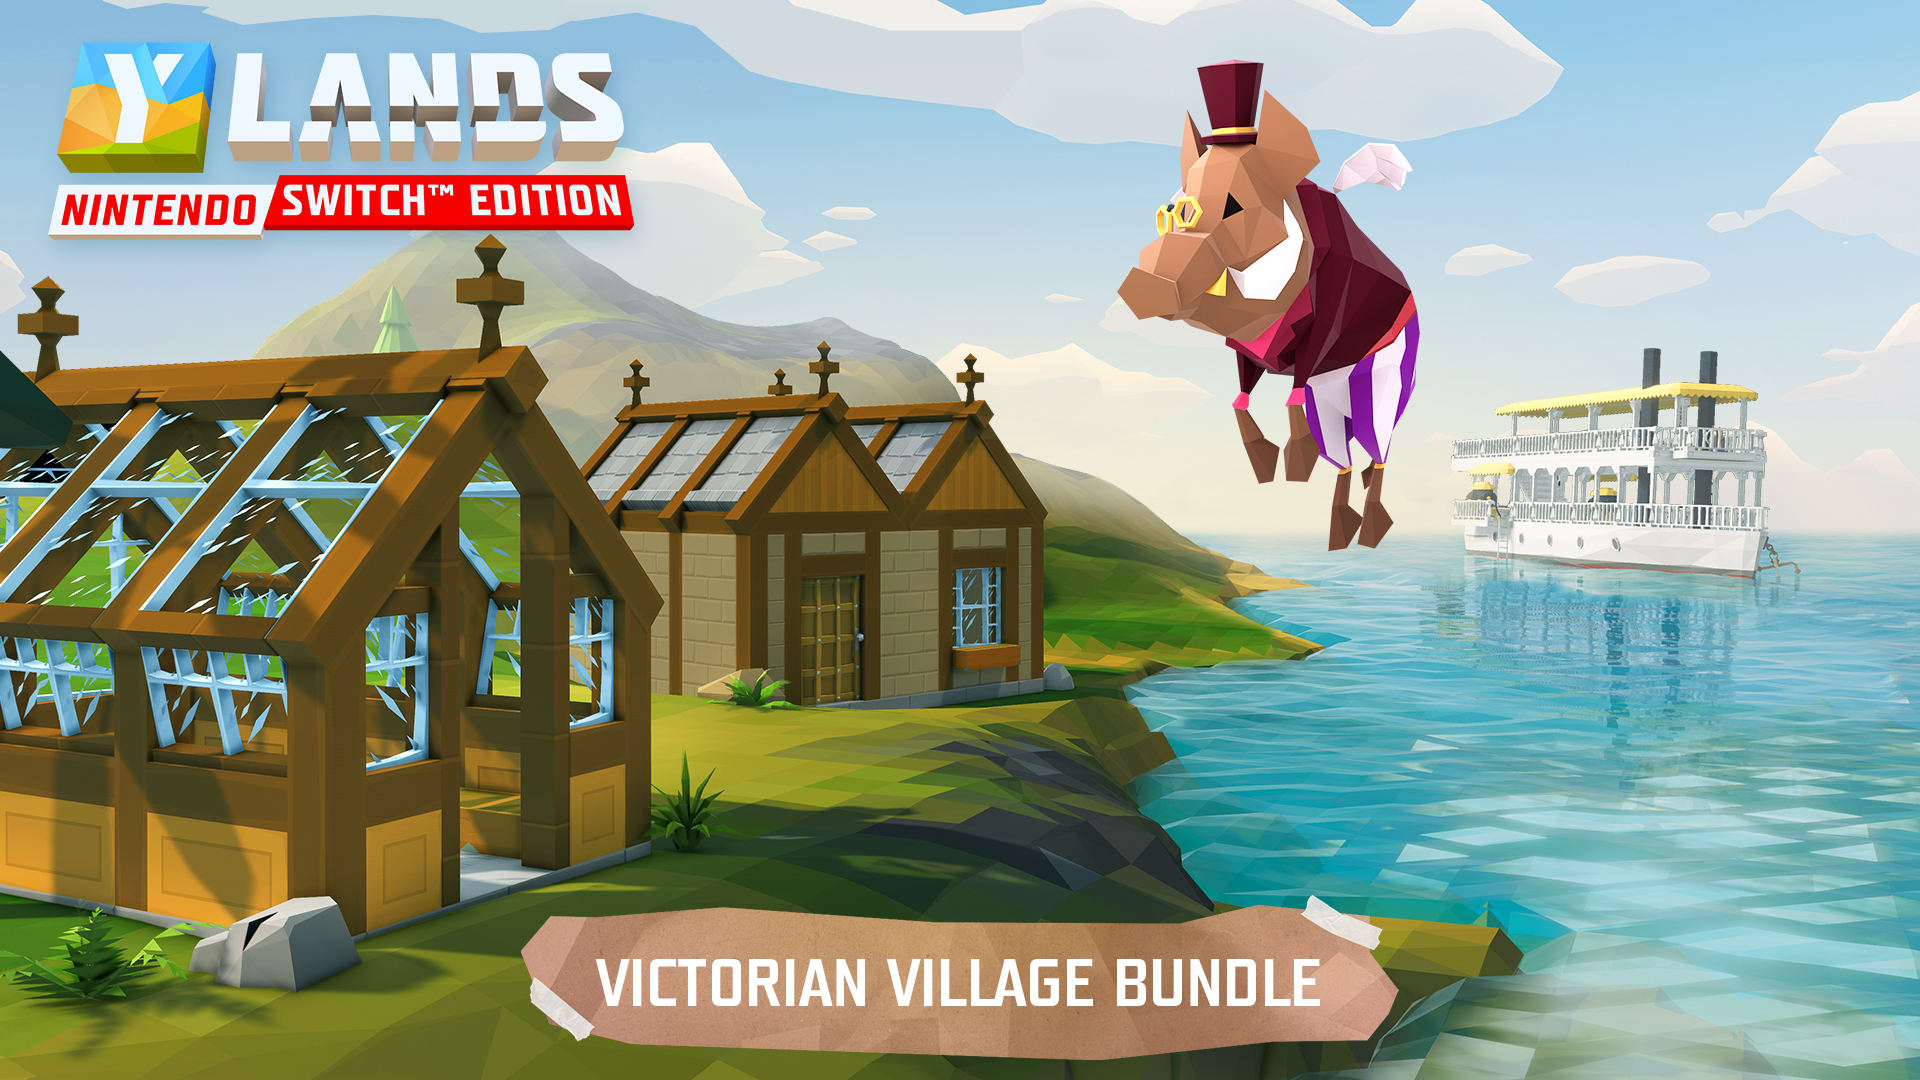 Ylands Nintendo Switch™ Edition - Victorian Village Bundle